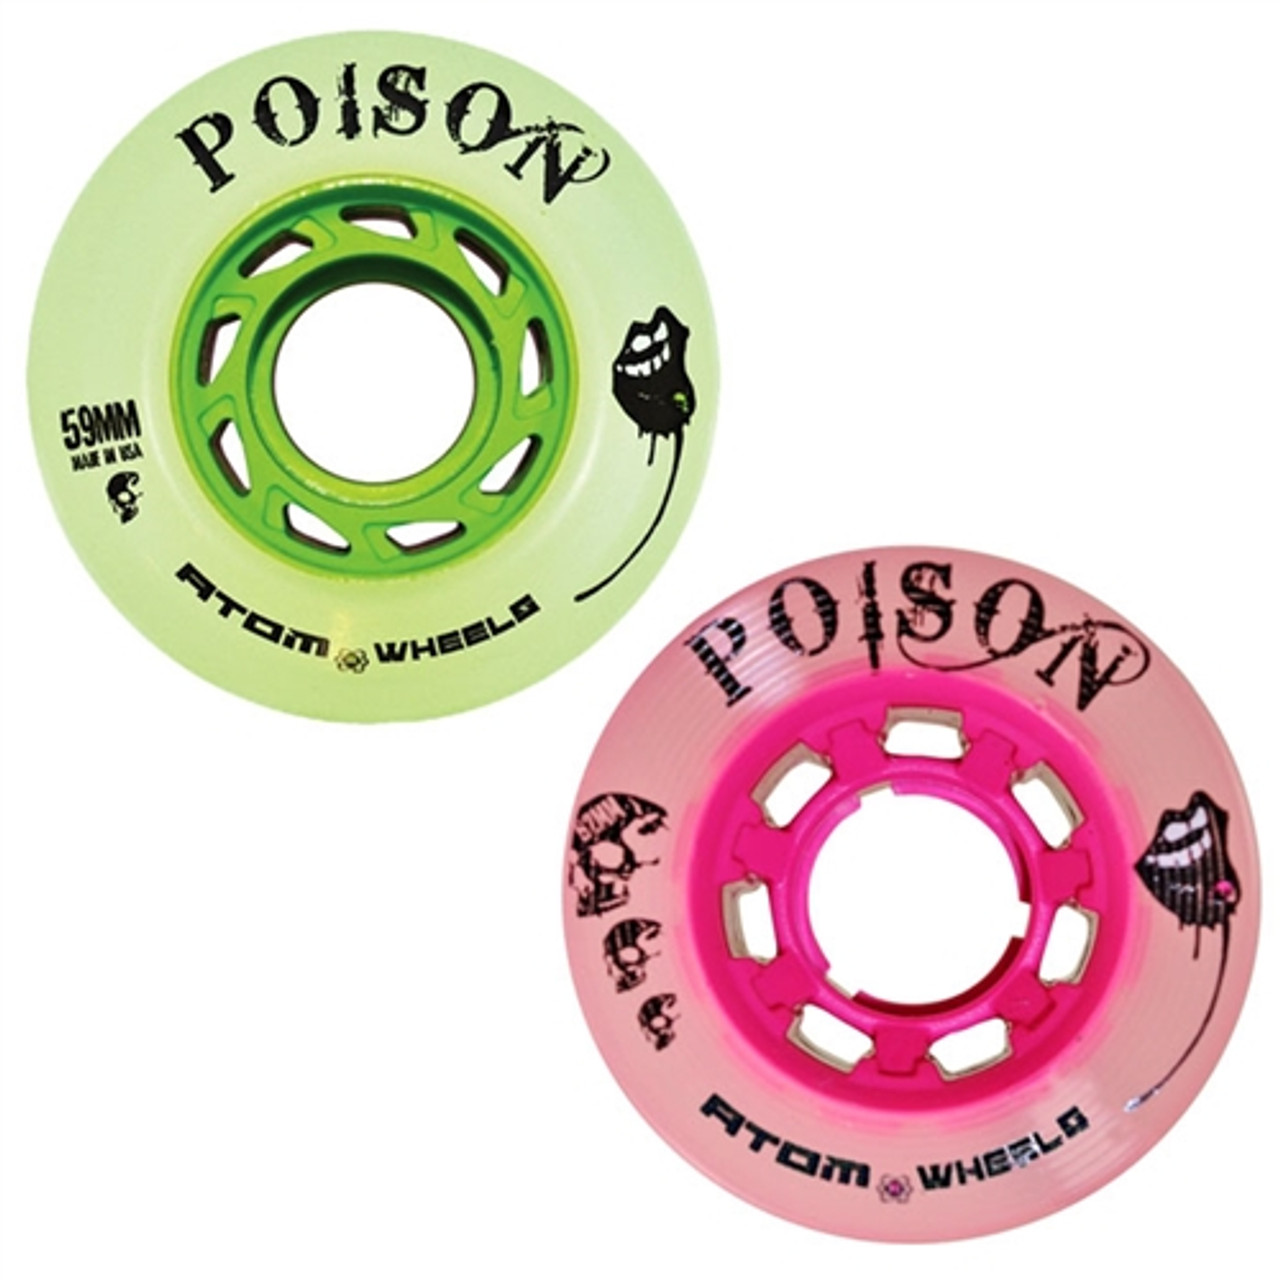 Monet Vervelend moeder Atom Poison Hybrid Skate Wheels | Indoor / Outdoor in Green or Pink